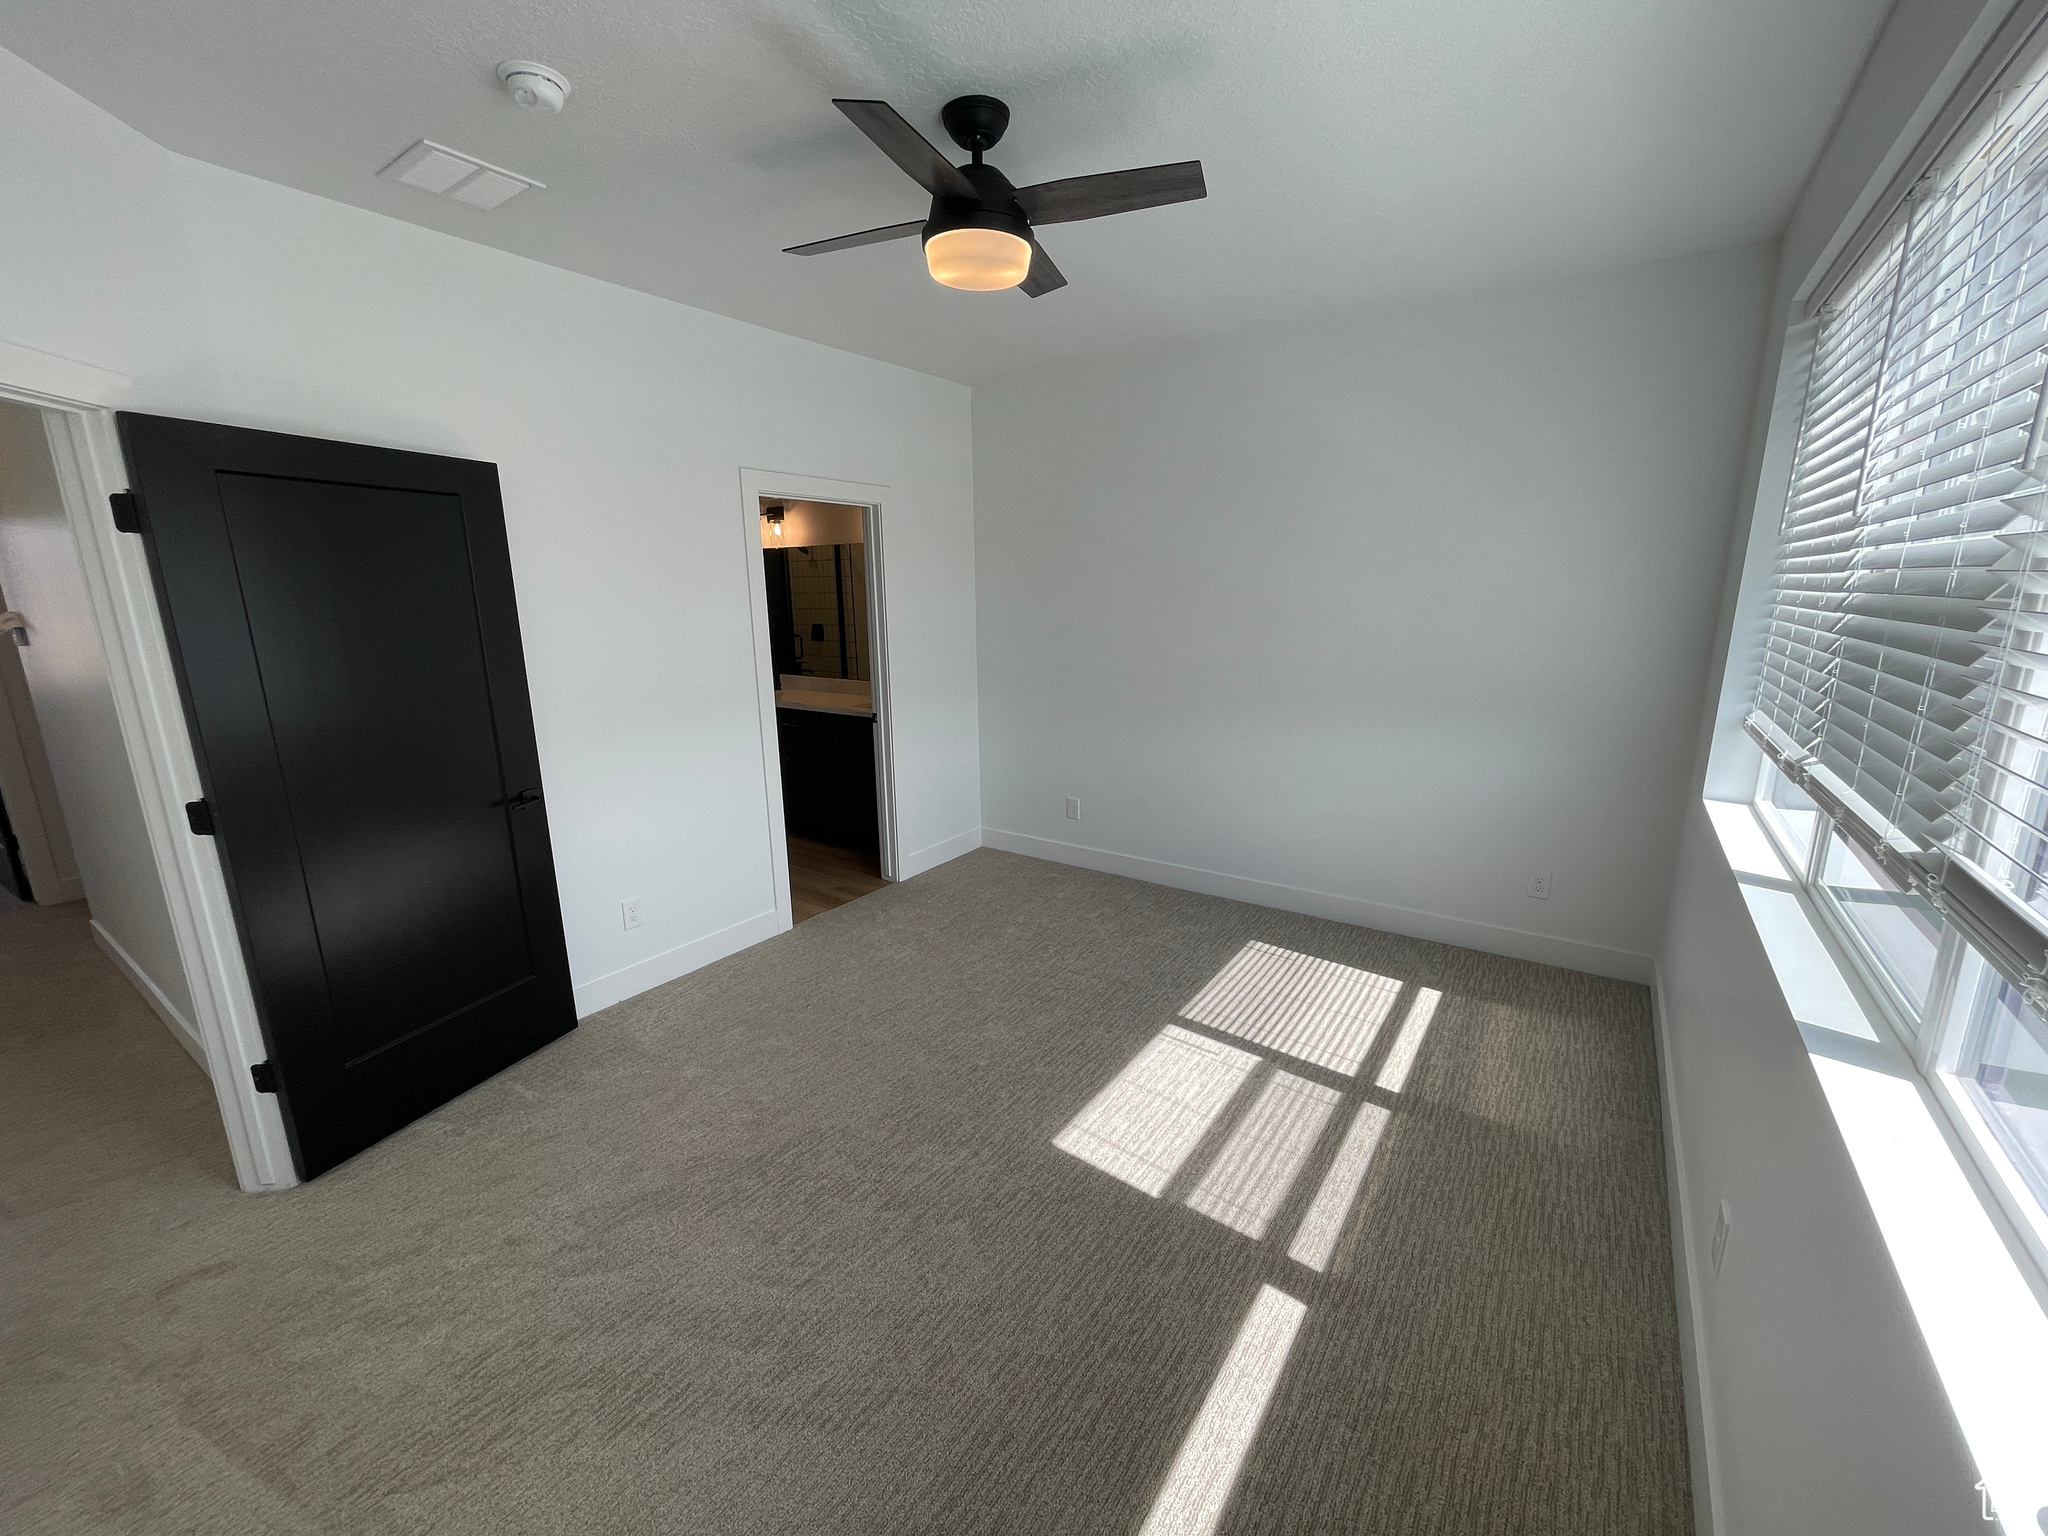 Unfurnished bedroom with light carpet, ensuite bathroom, and ceiling fan